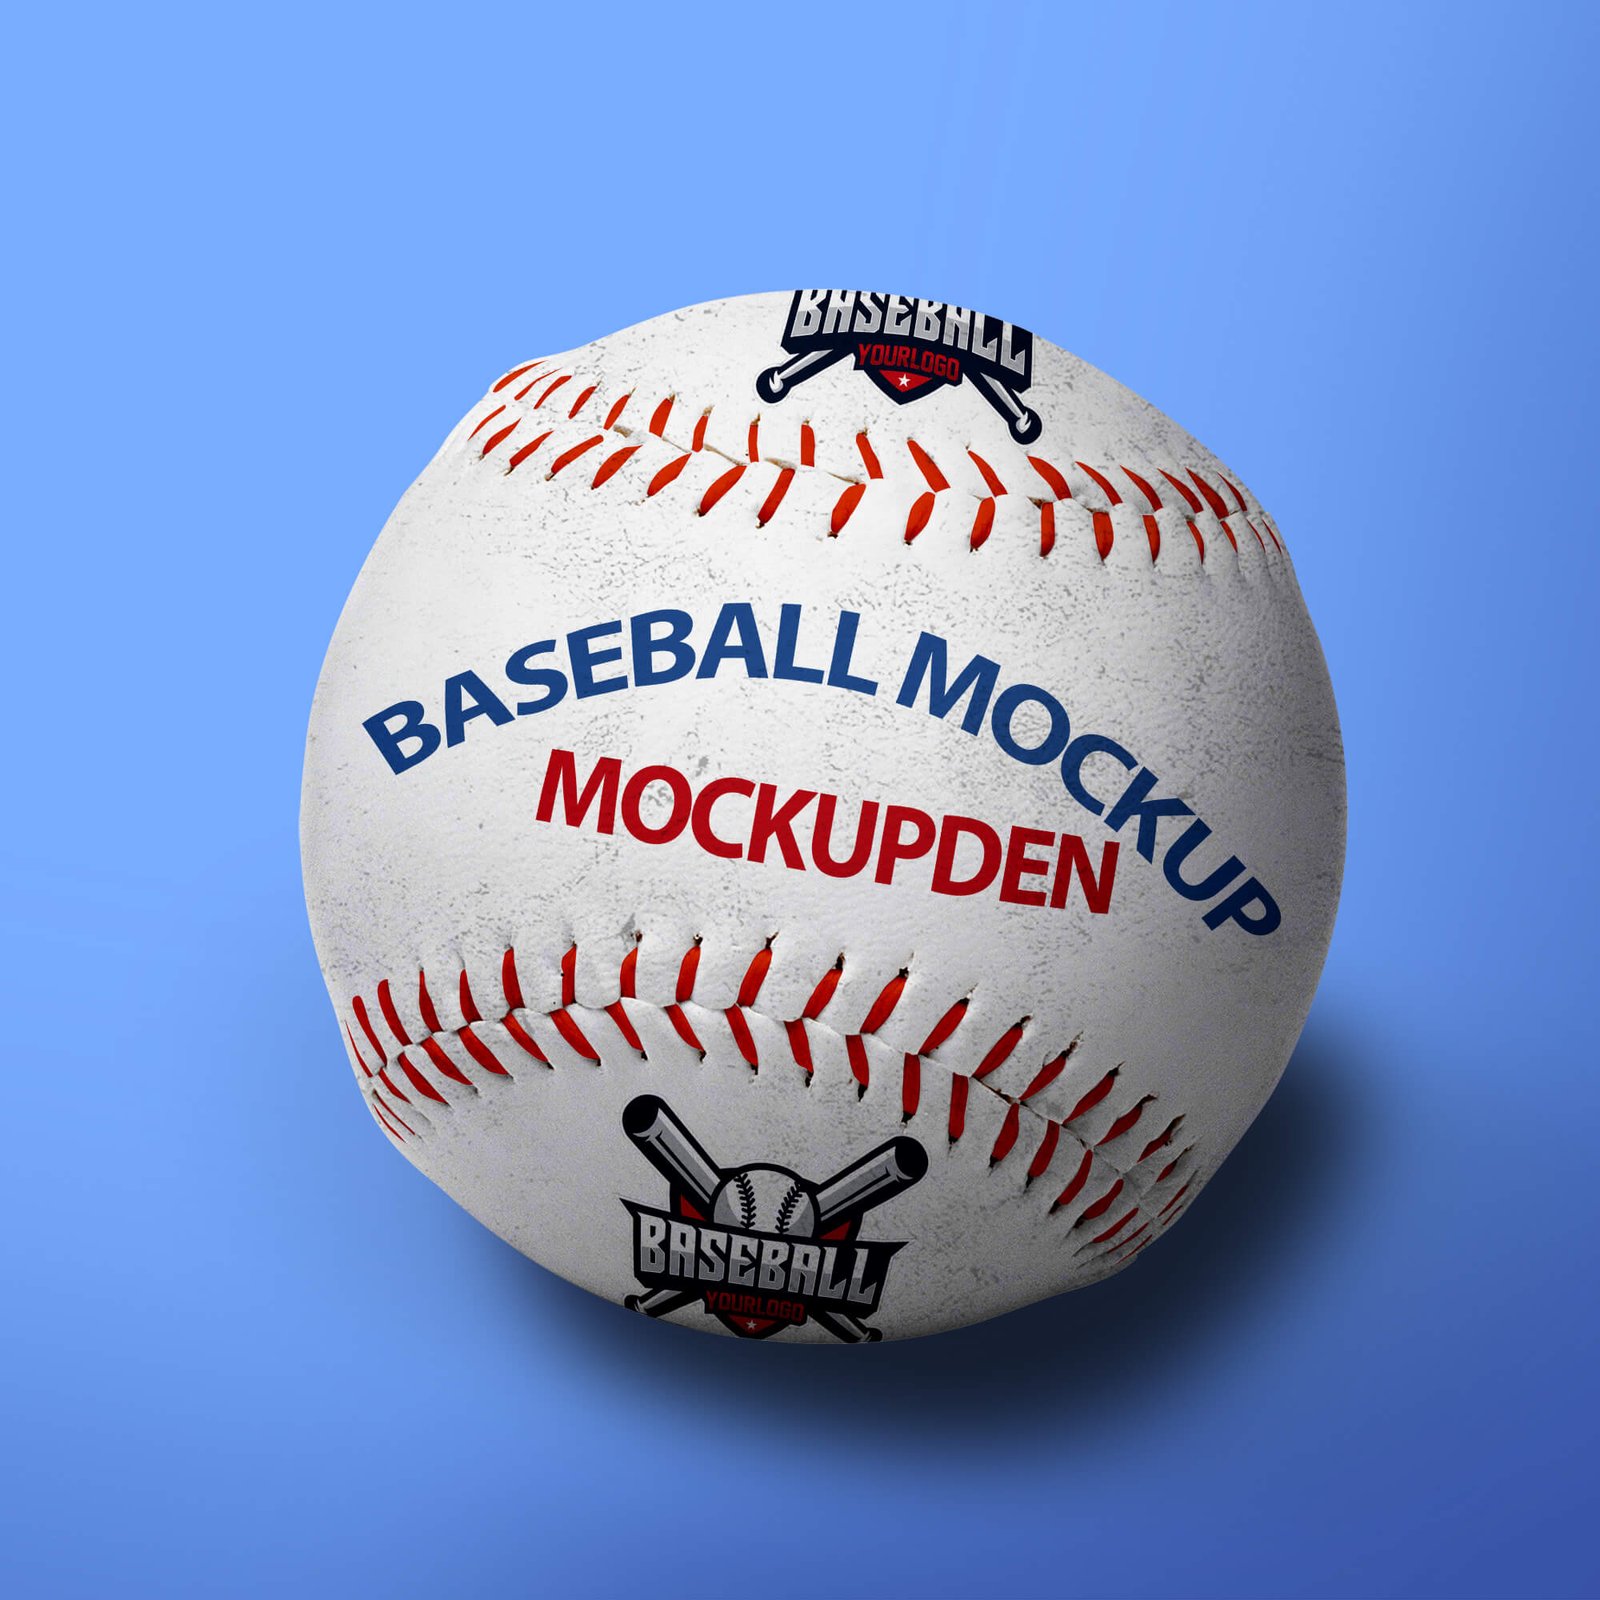 Design Free Baseball Mockup PSD Template